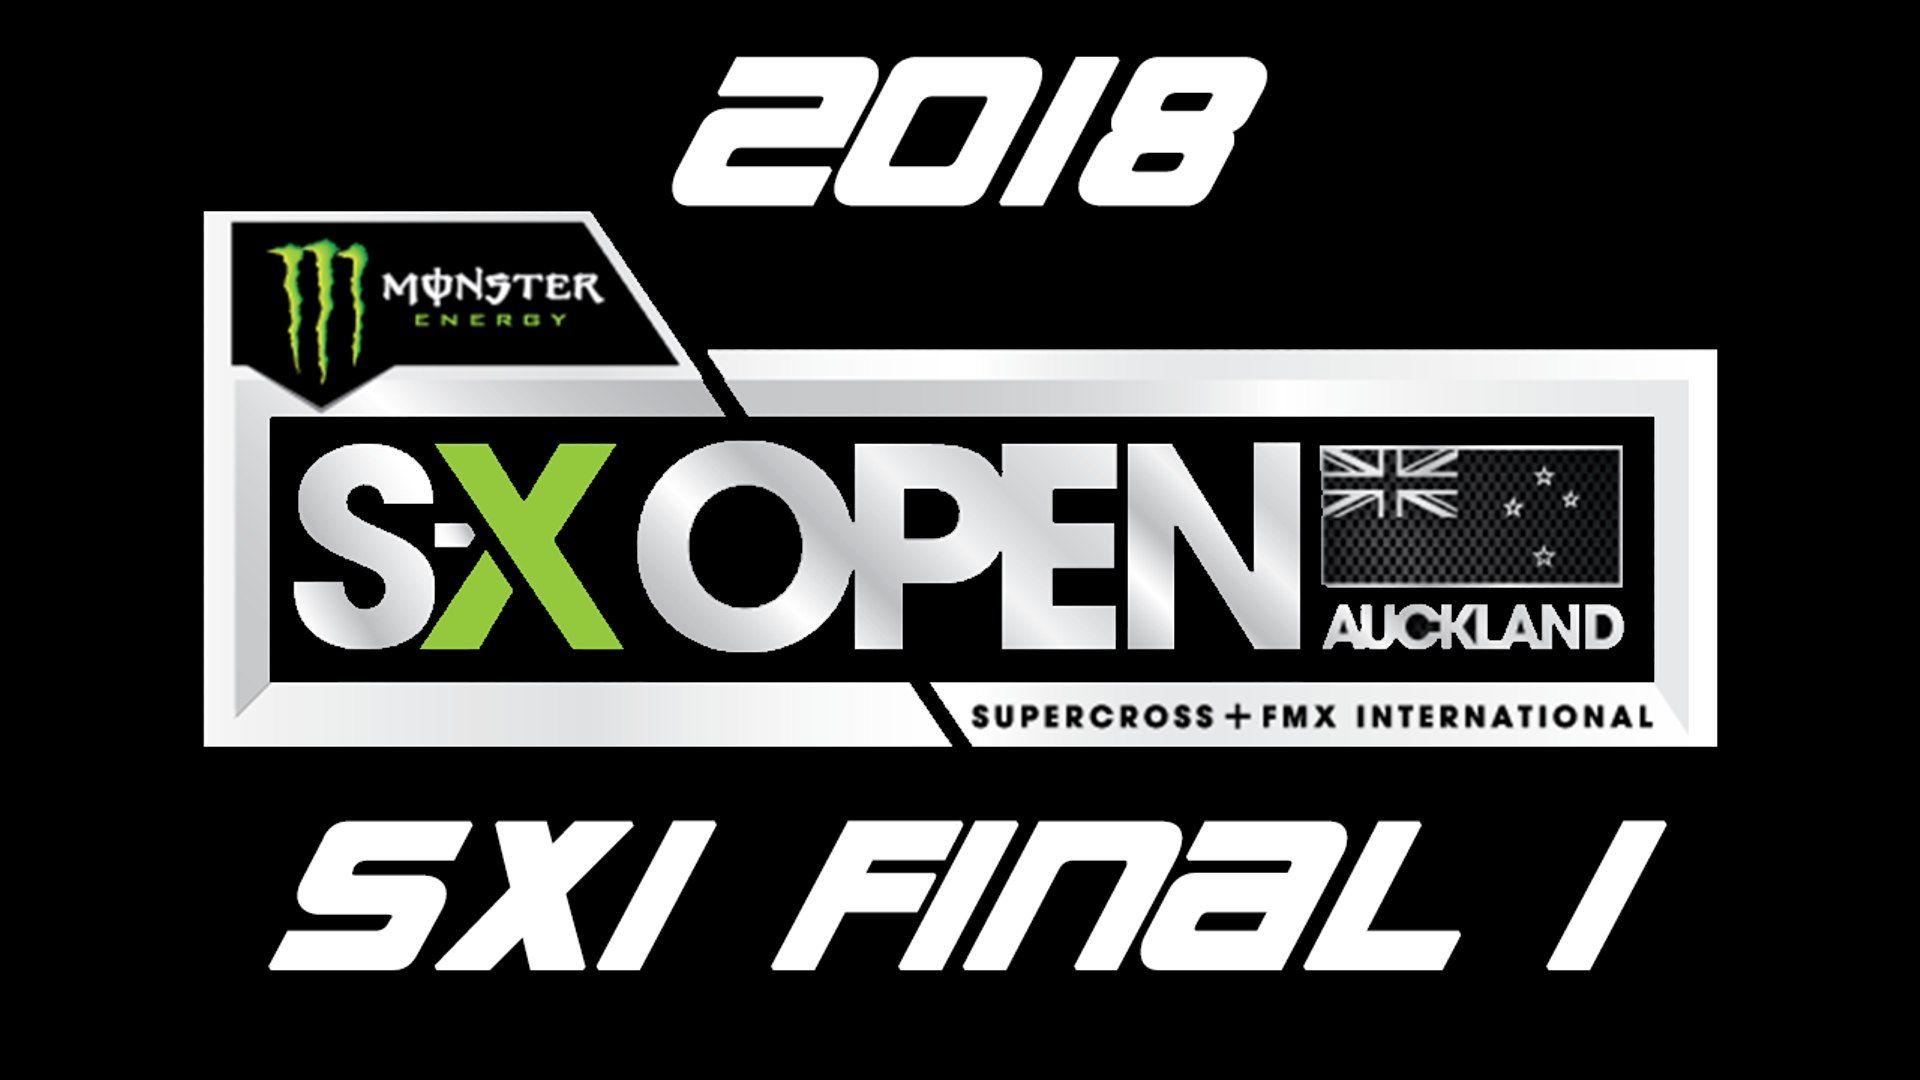 Monster Energy Supercross Logo - 2018 Monster Energy SX Open - Auckland SX1 Final 1 HD - video ...